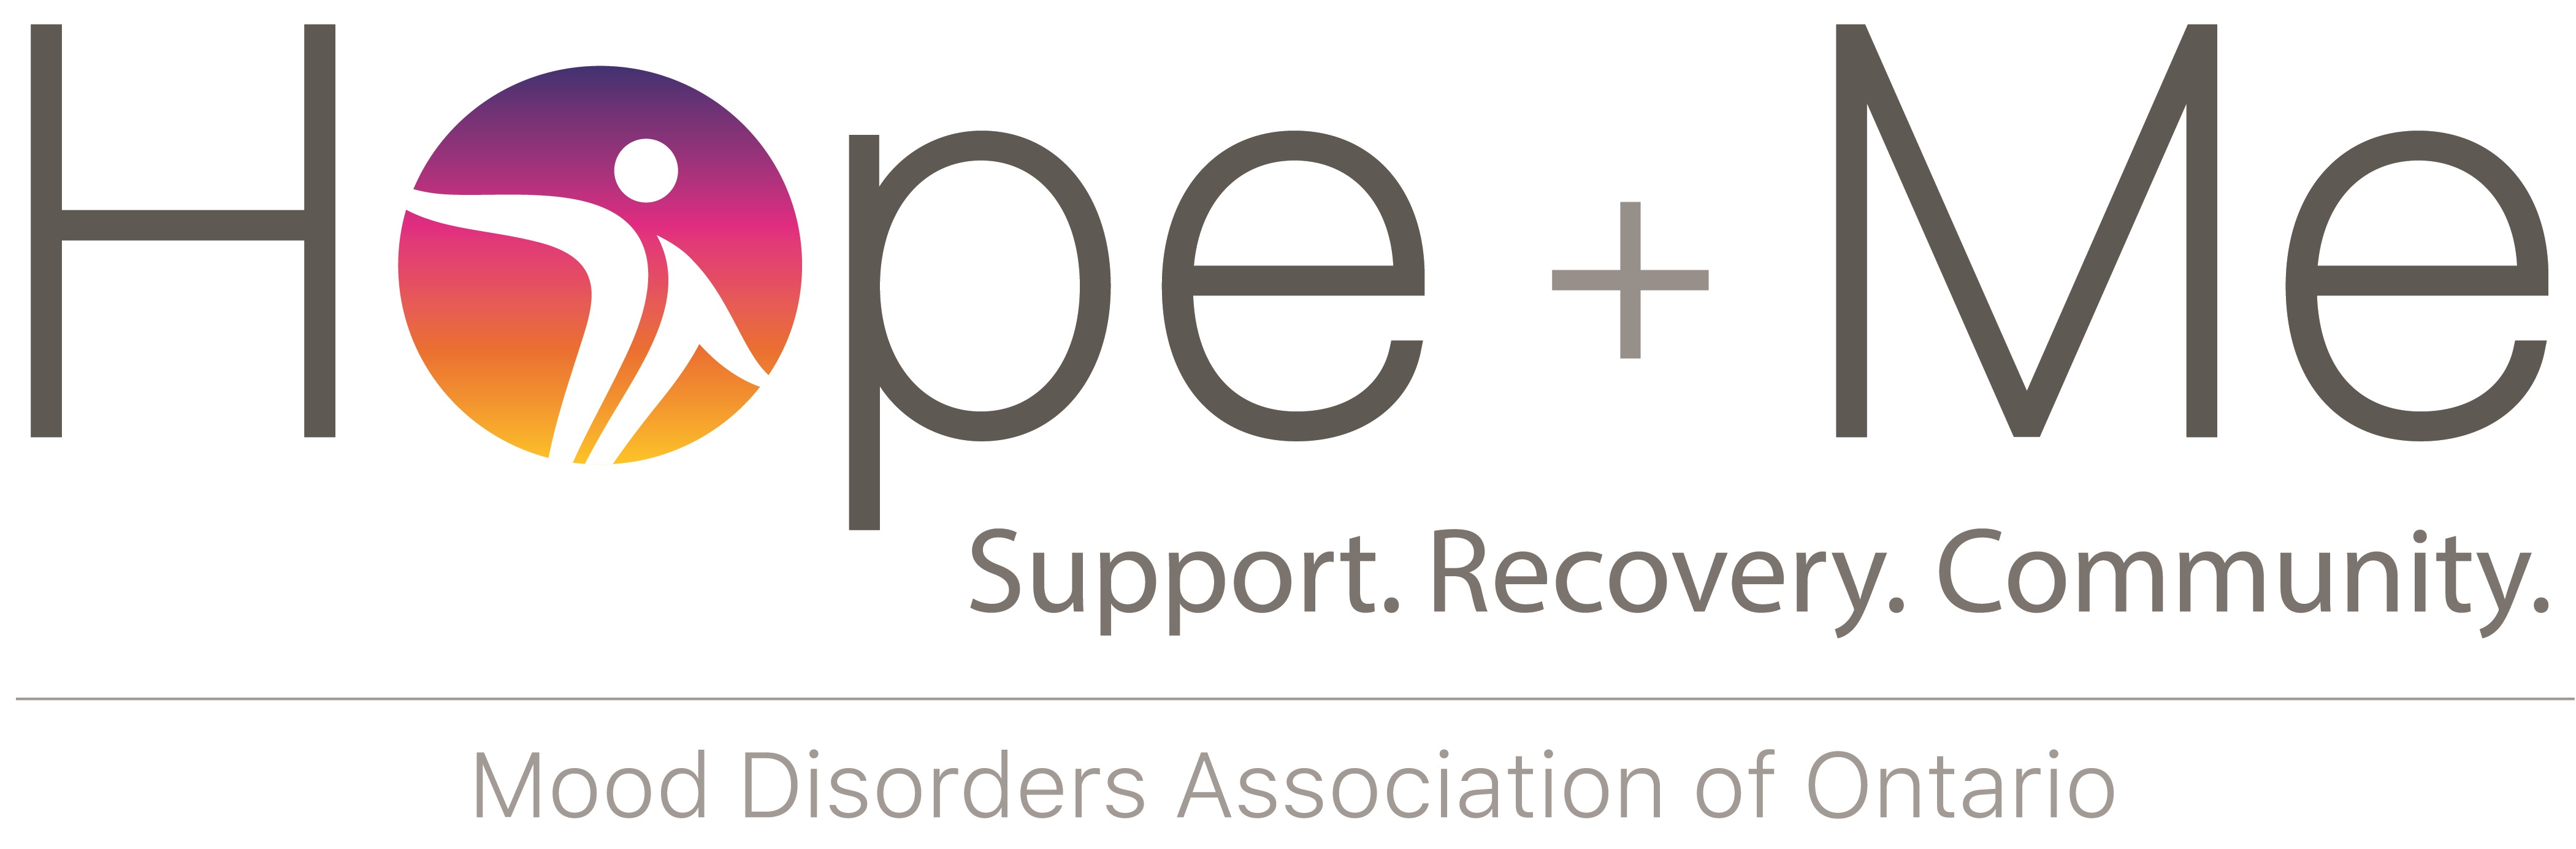 Hope + Me - Mood Disorders Association of Ontario logo